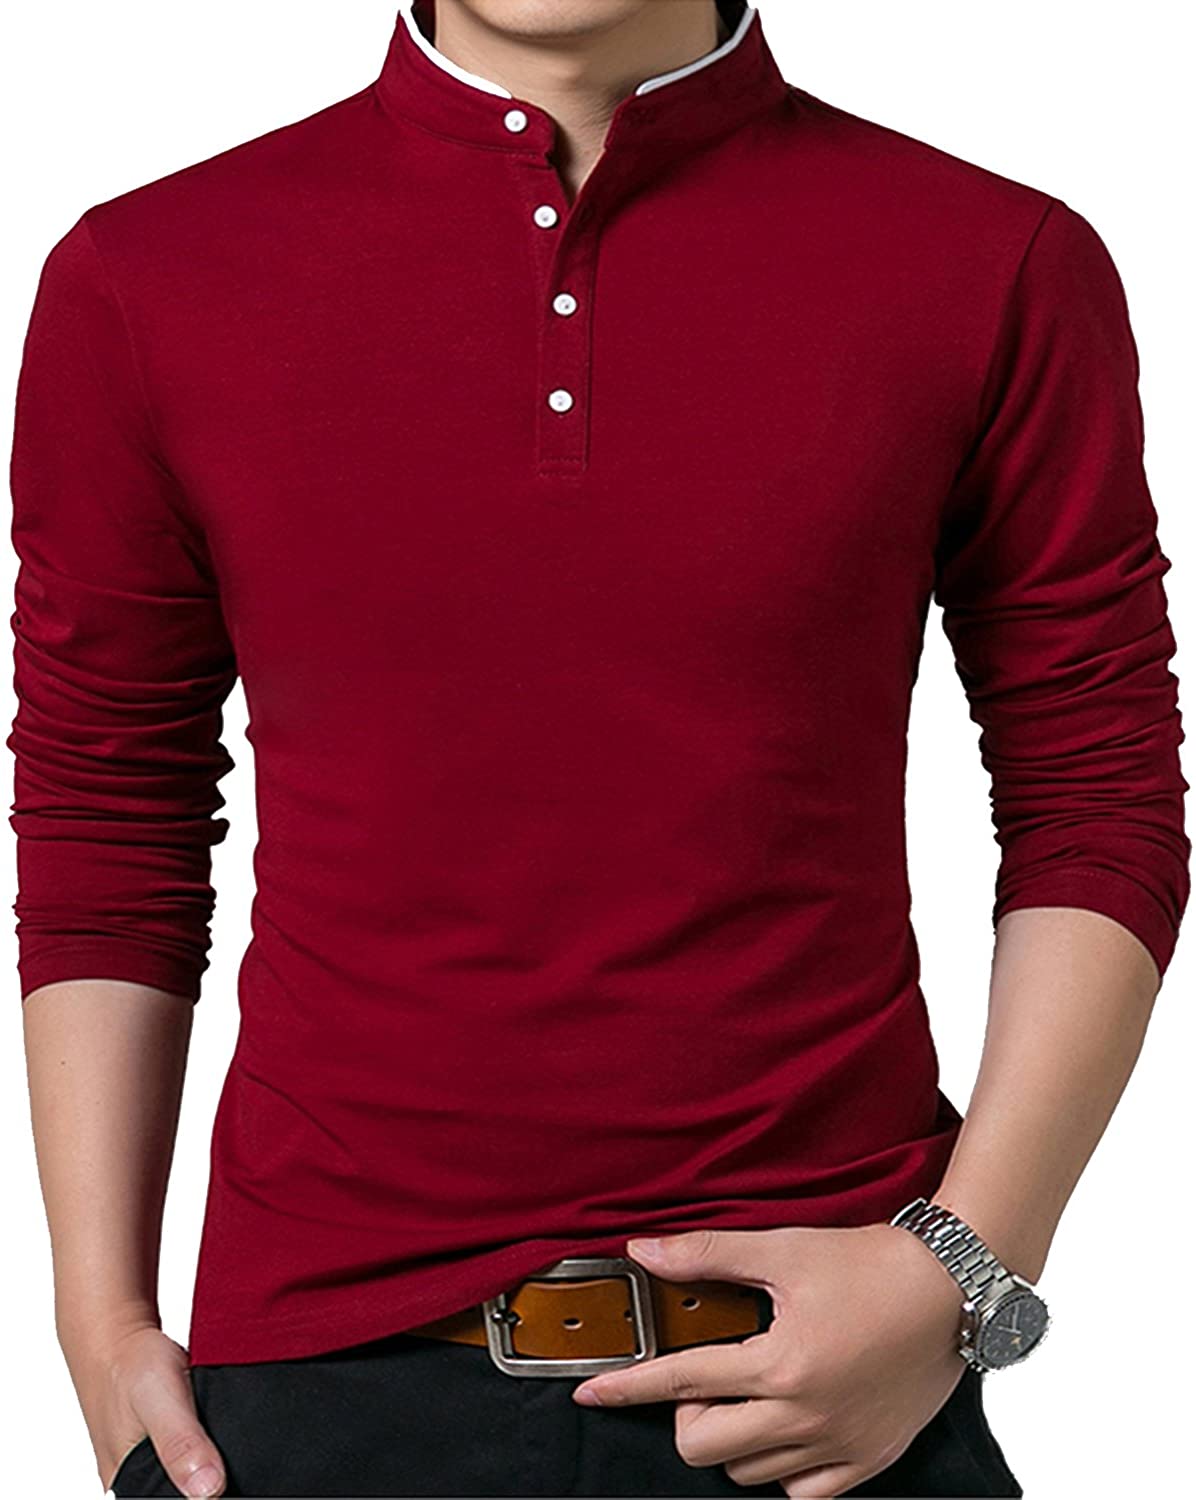 KUYIGO Mens Slim Fit Longt & Short Sleeve Beefy Fashion Casual Henley T Shirts of Cotton Shirts 